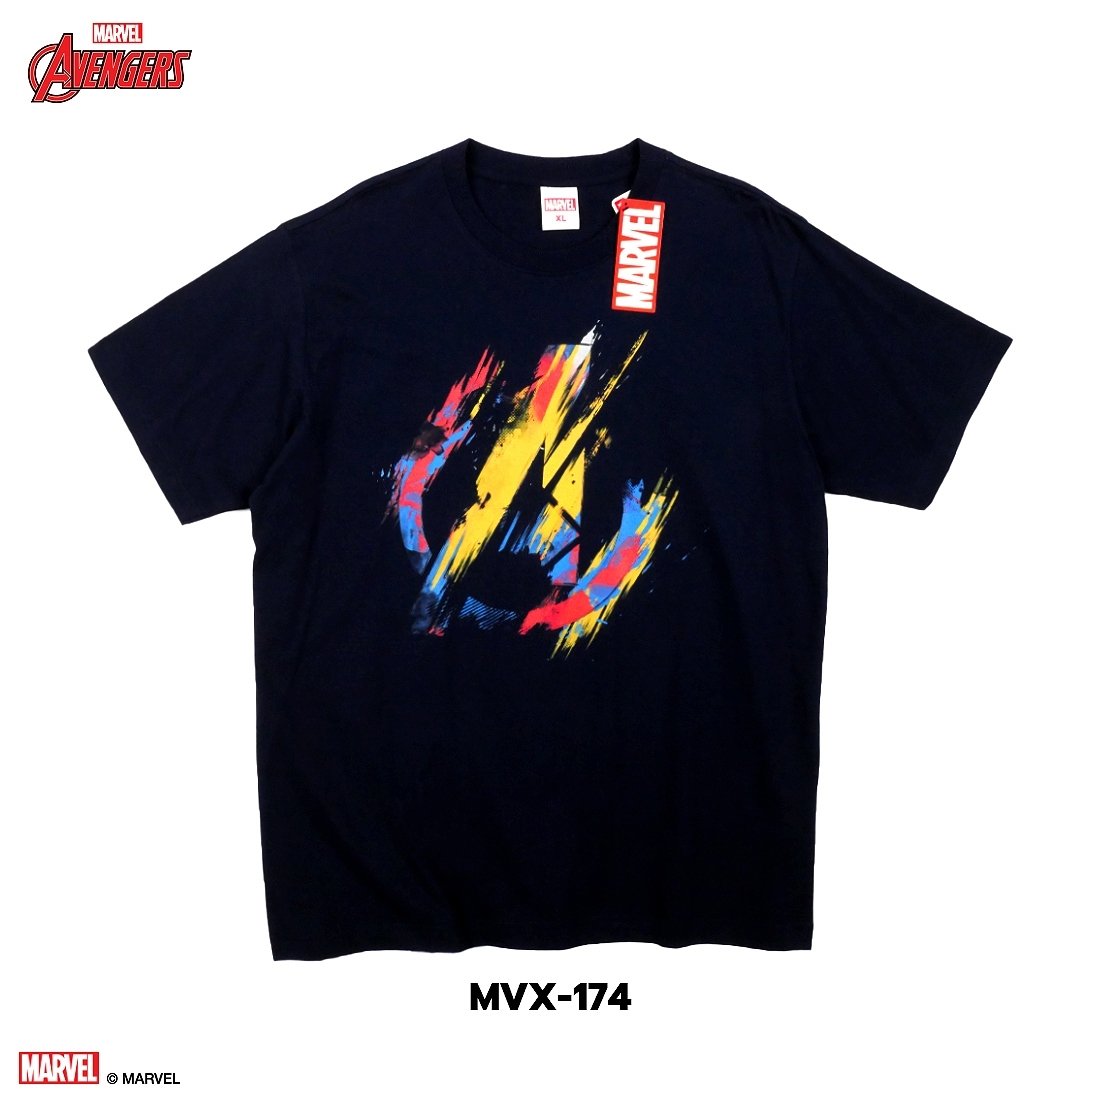 Marvel Avengers Comics T-shirt (MVX-174)